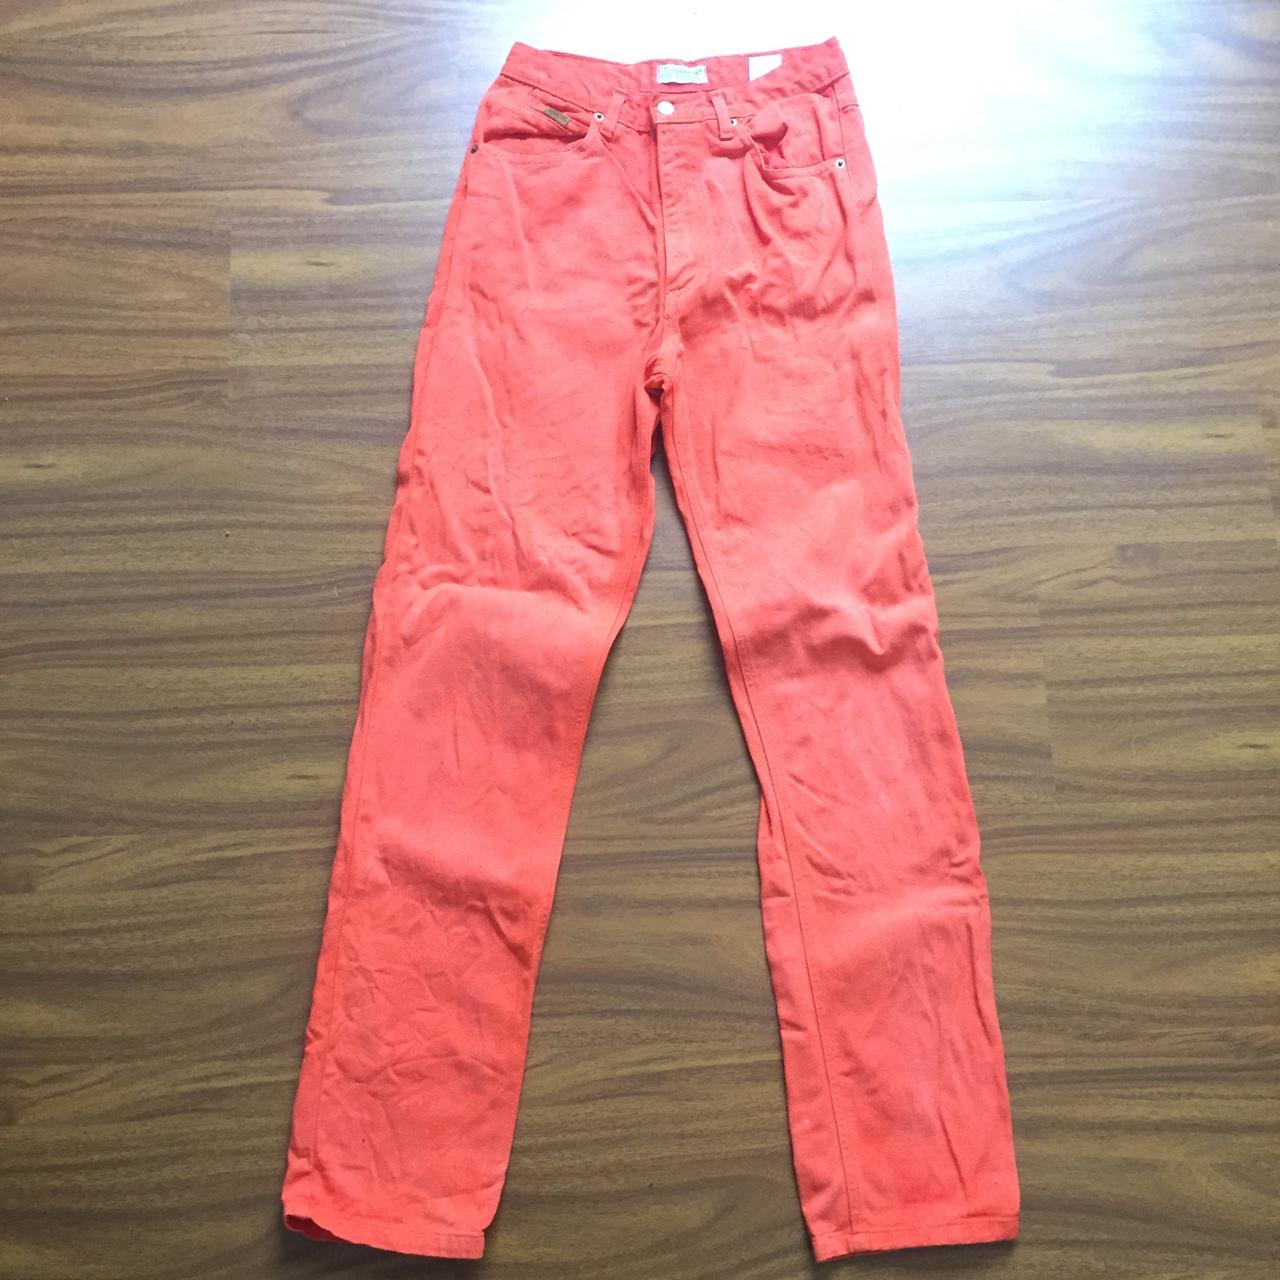 Morrisons orange high waisted jeans. Size 10. Has a... - Depop